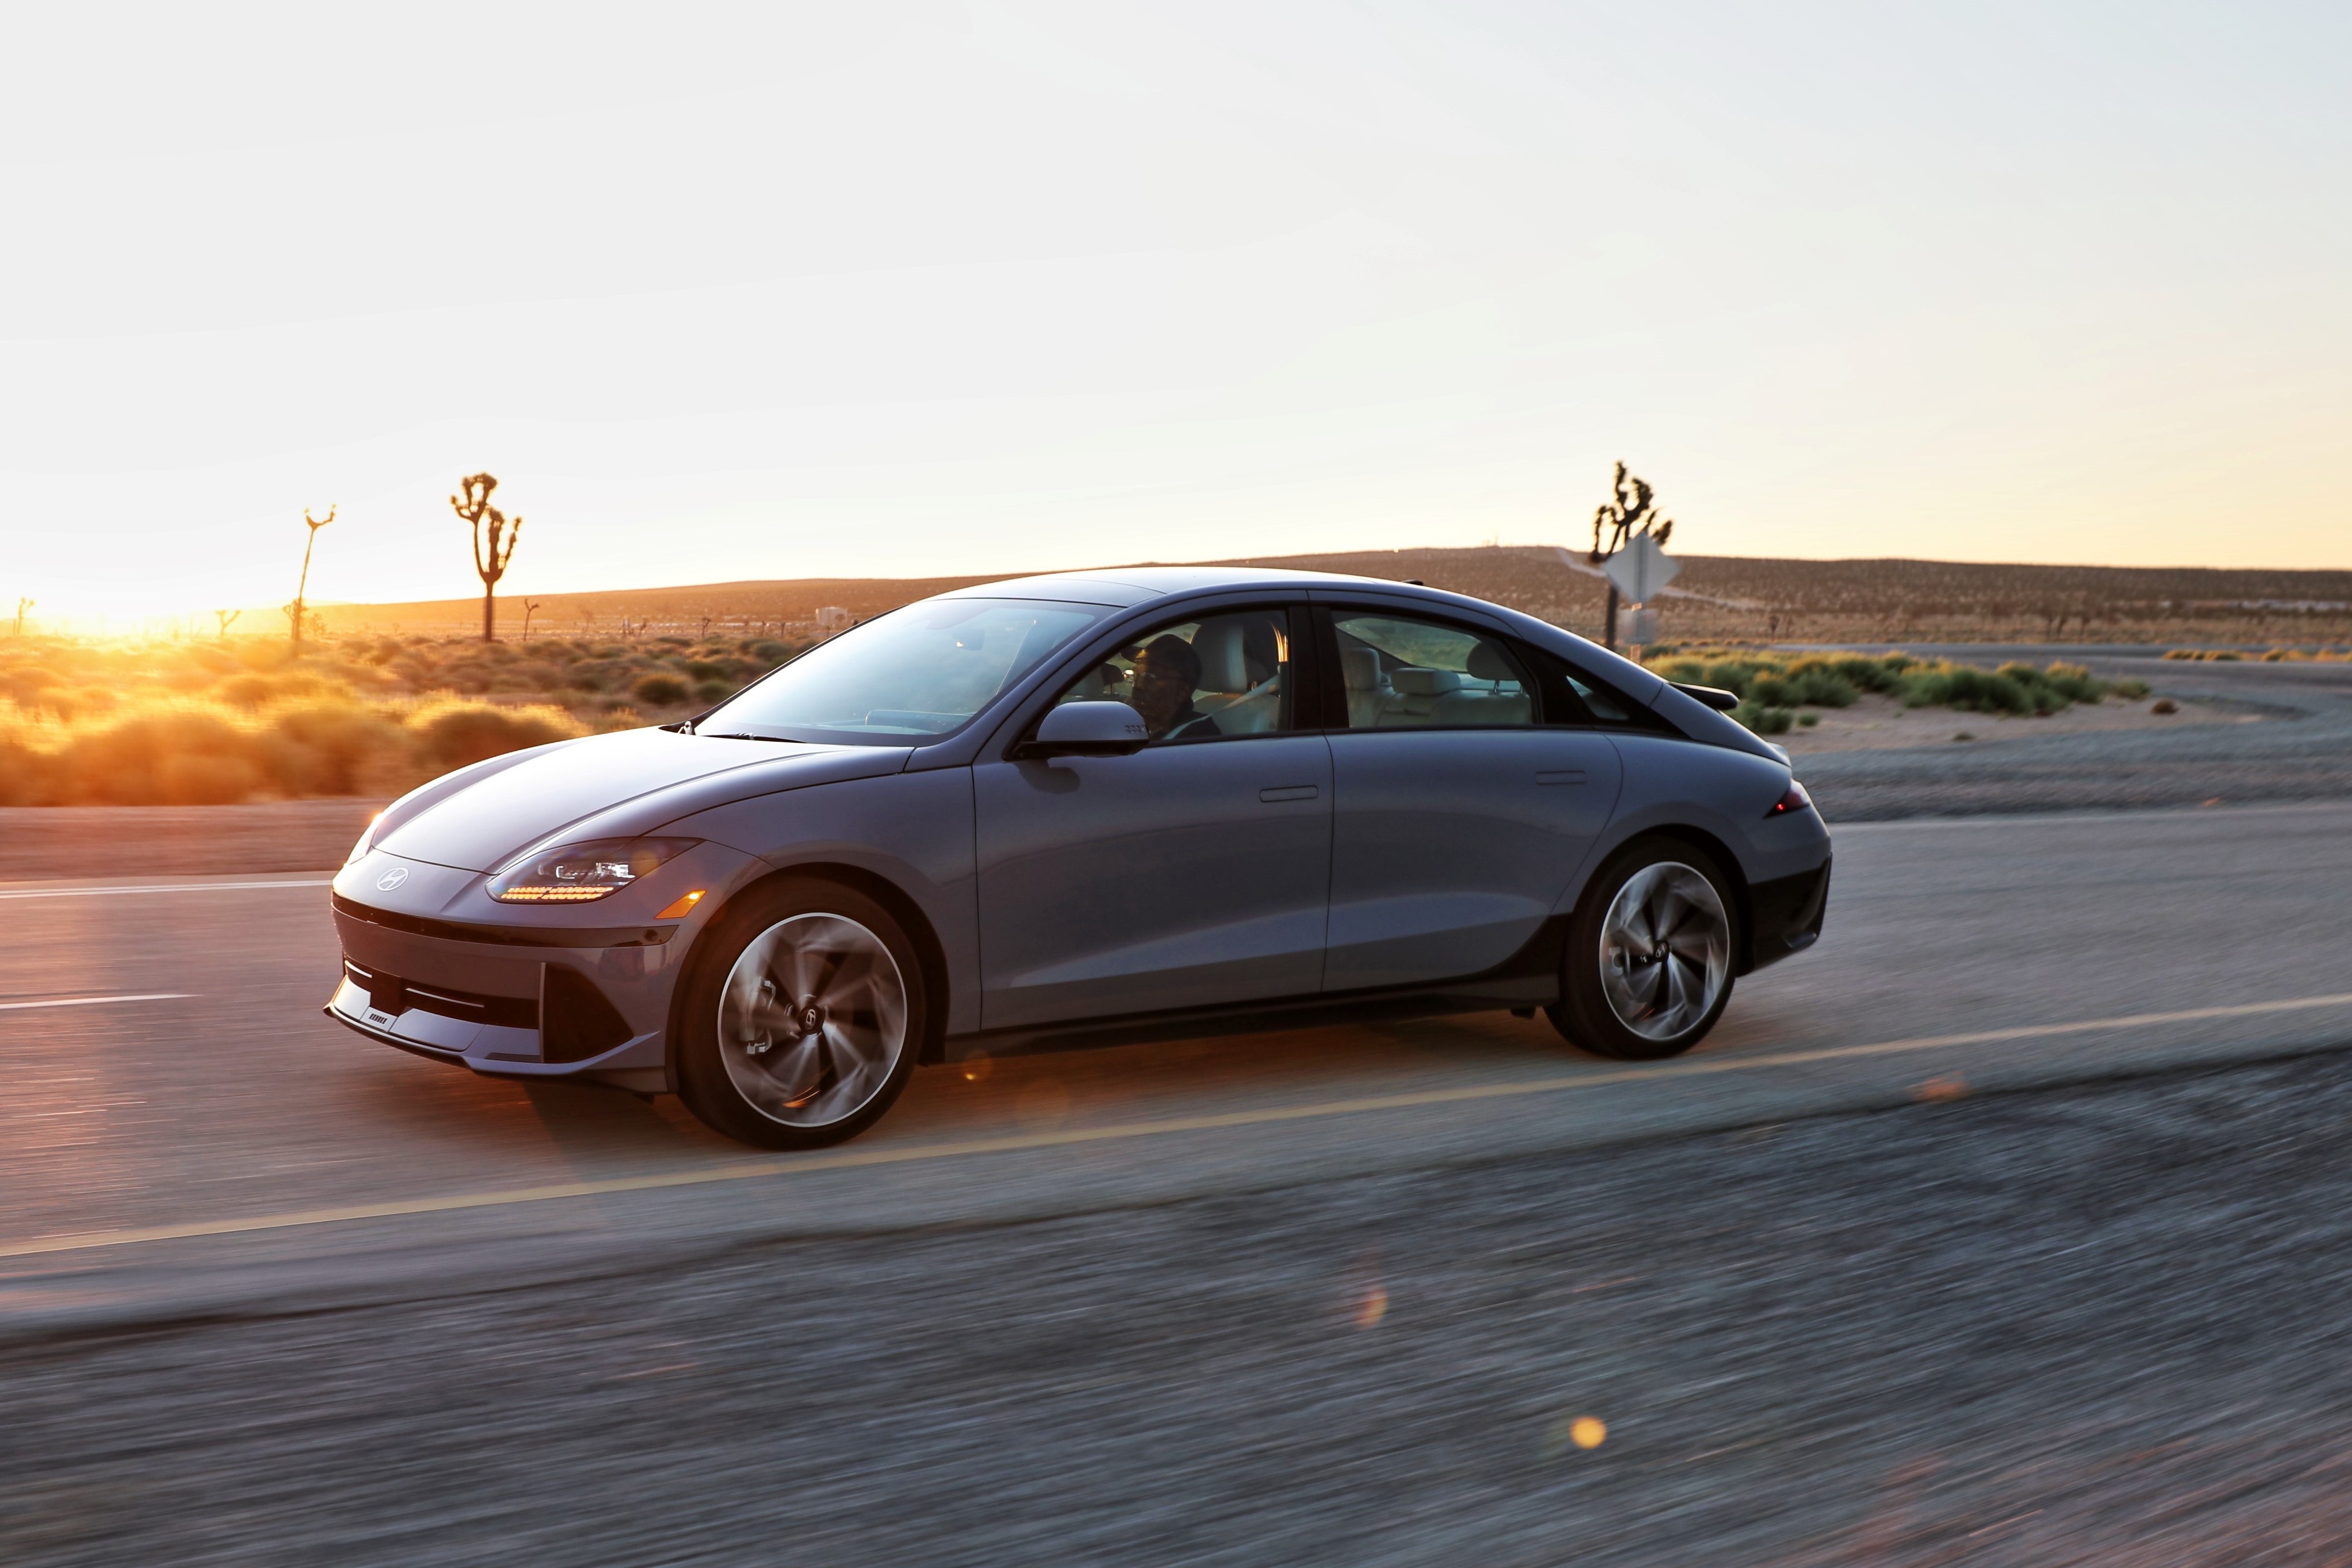 Hyundai follows Tesla's playbook by slashing the price of the